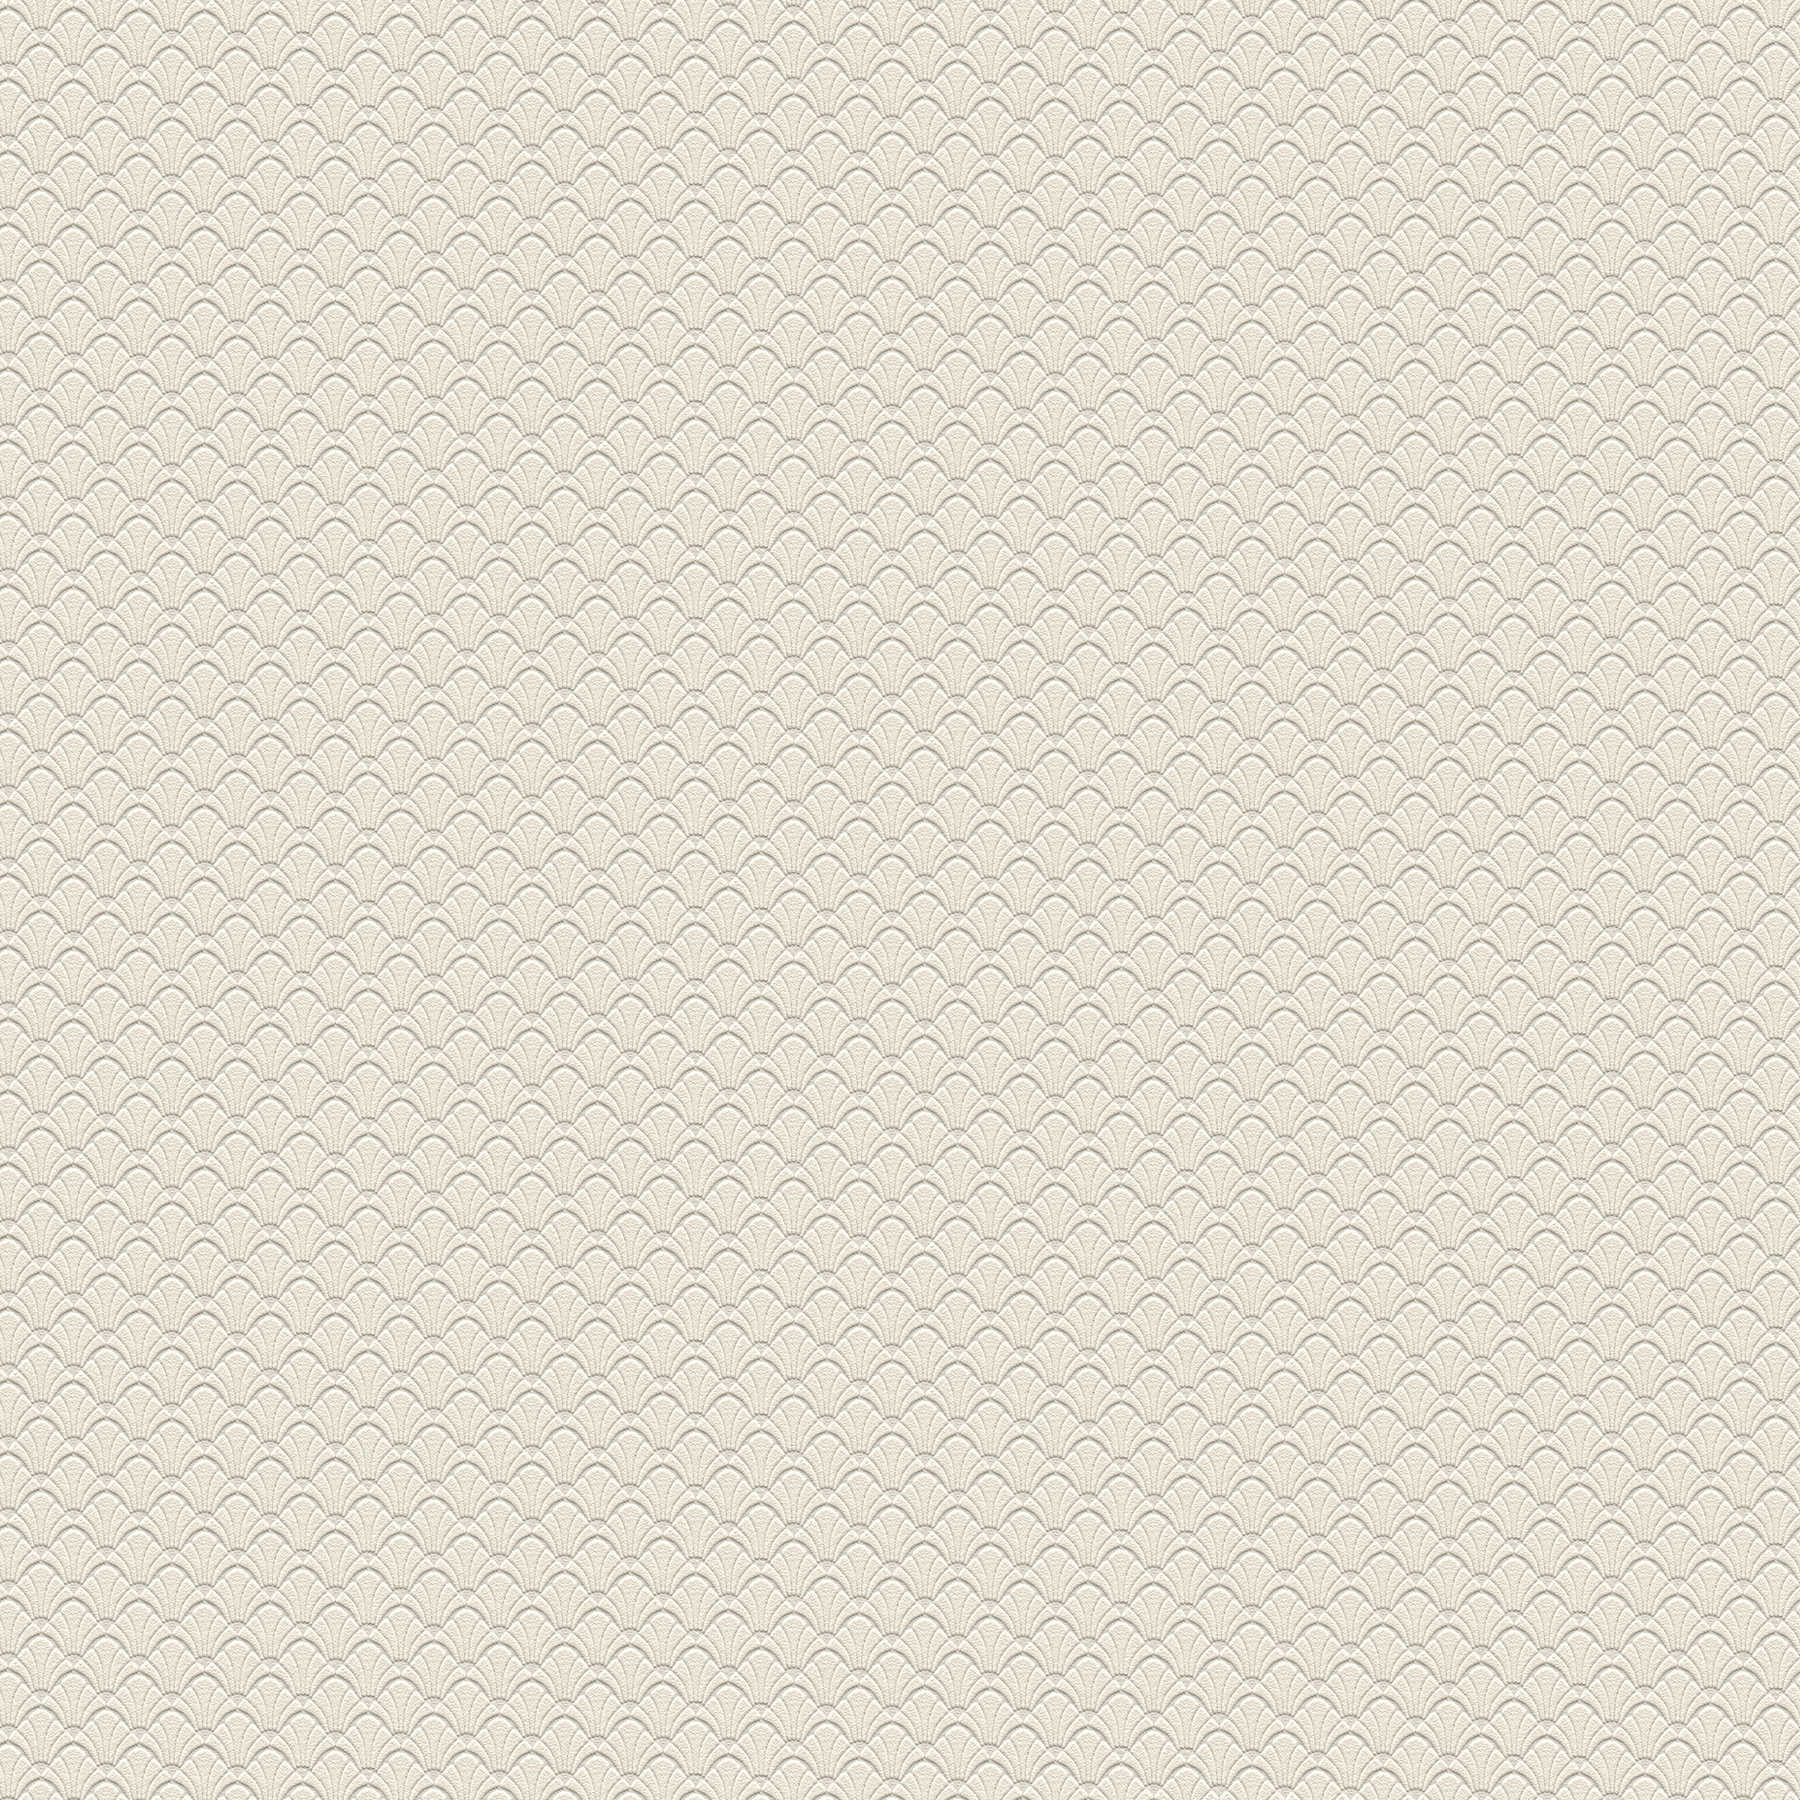         Wallpaper filigree structure pattern in shell design - beige, grey
    